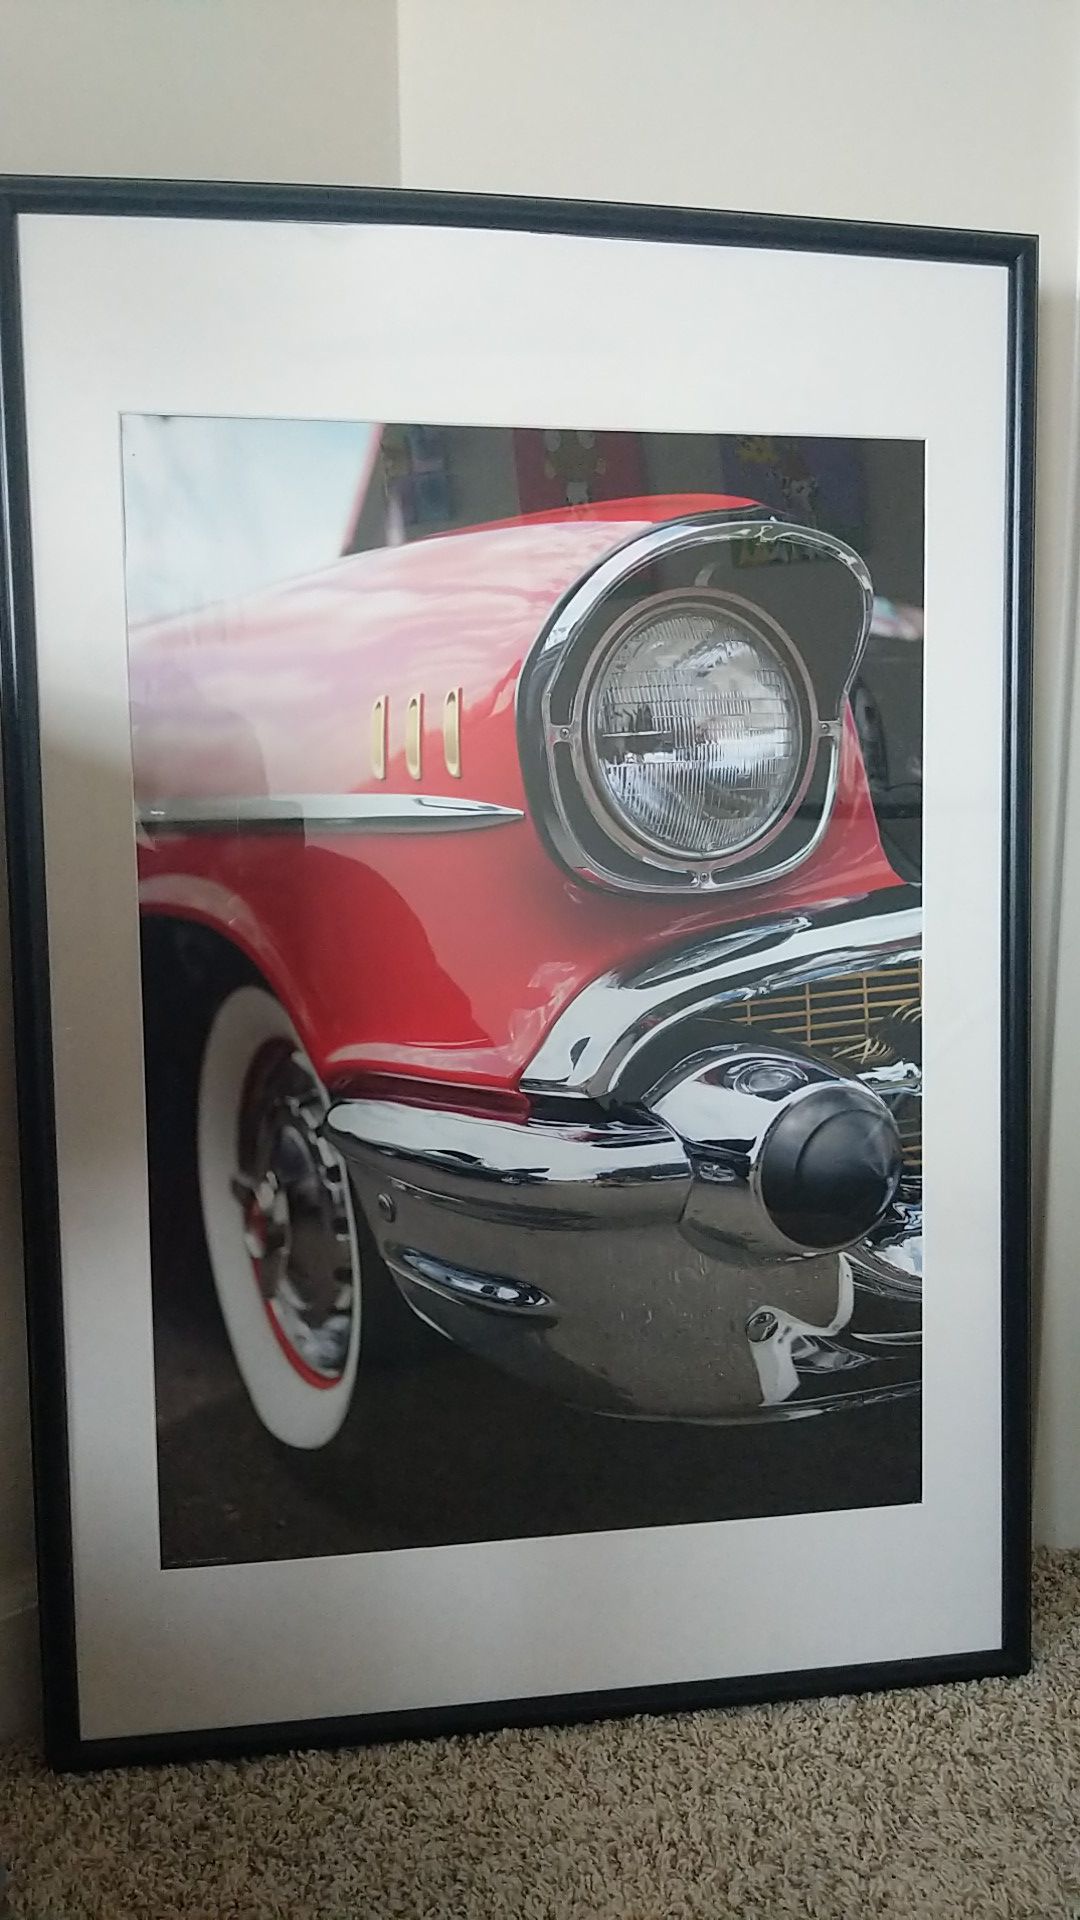 Vintage car poster in a hanging